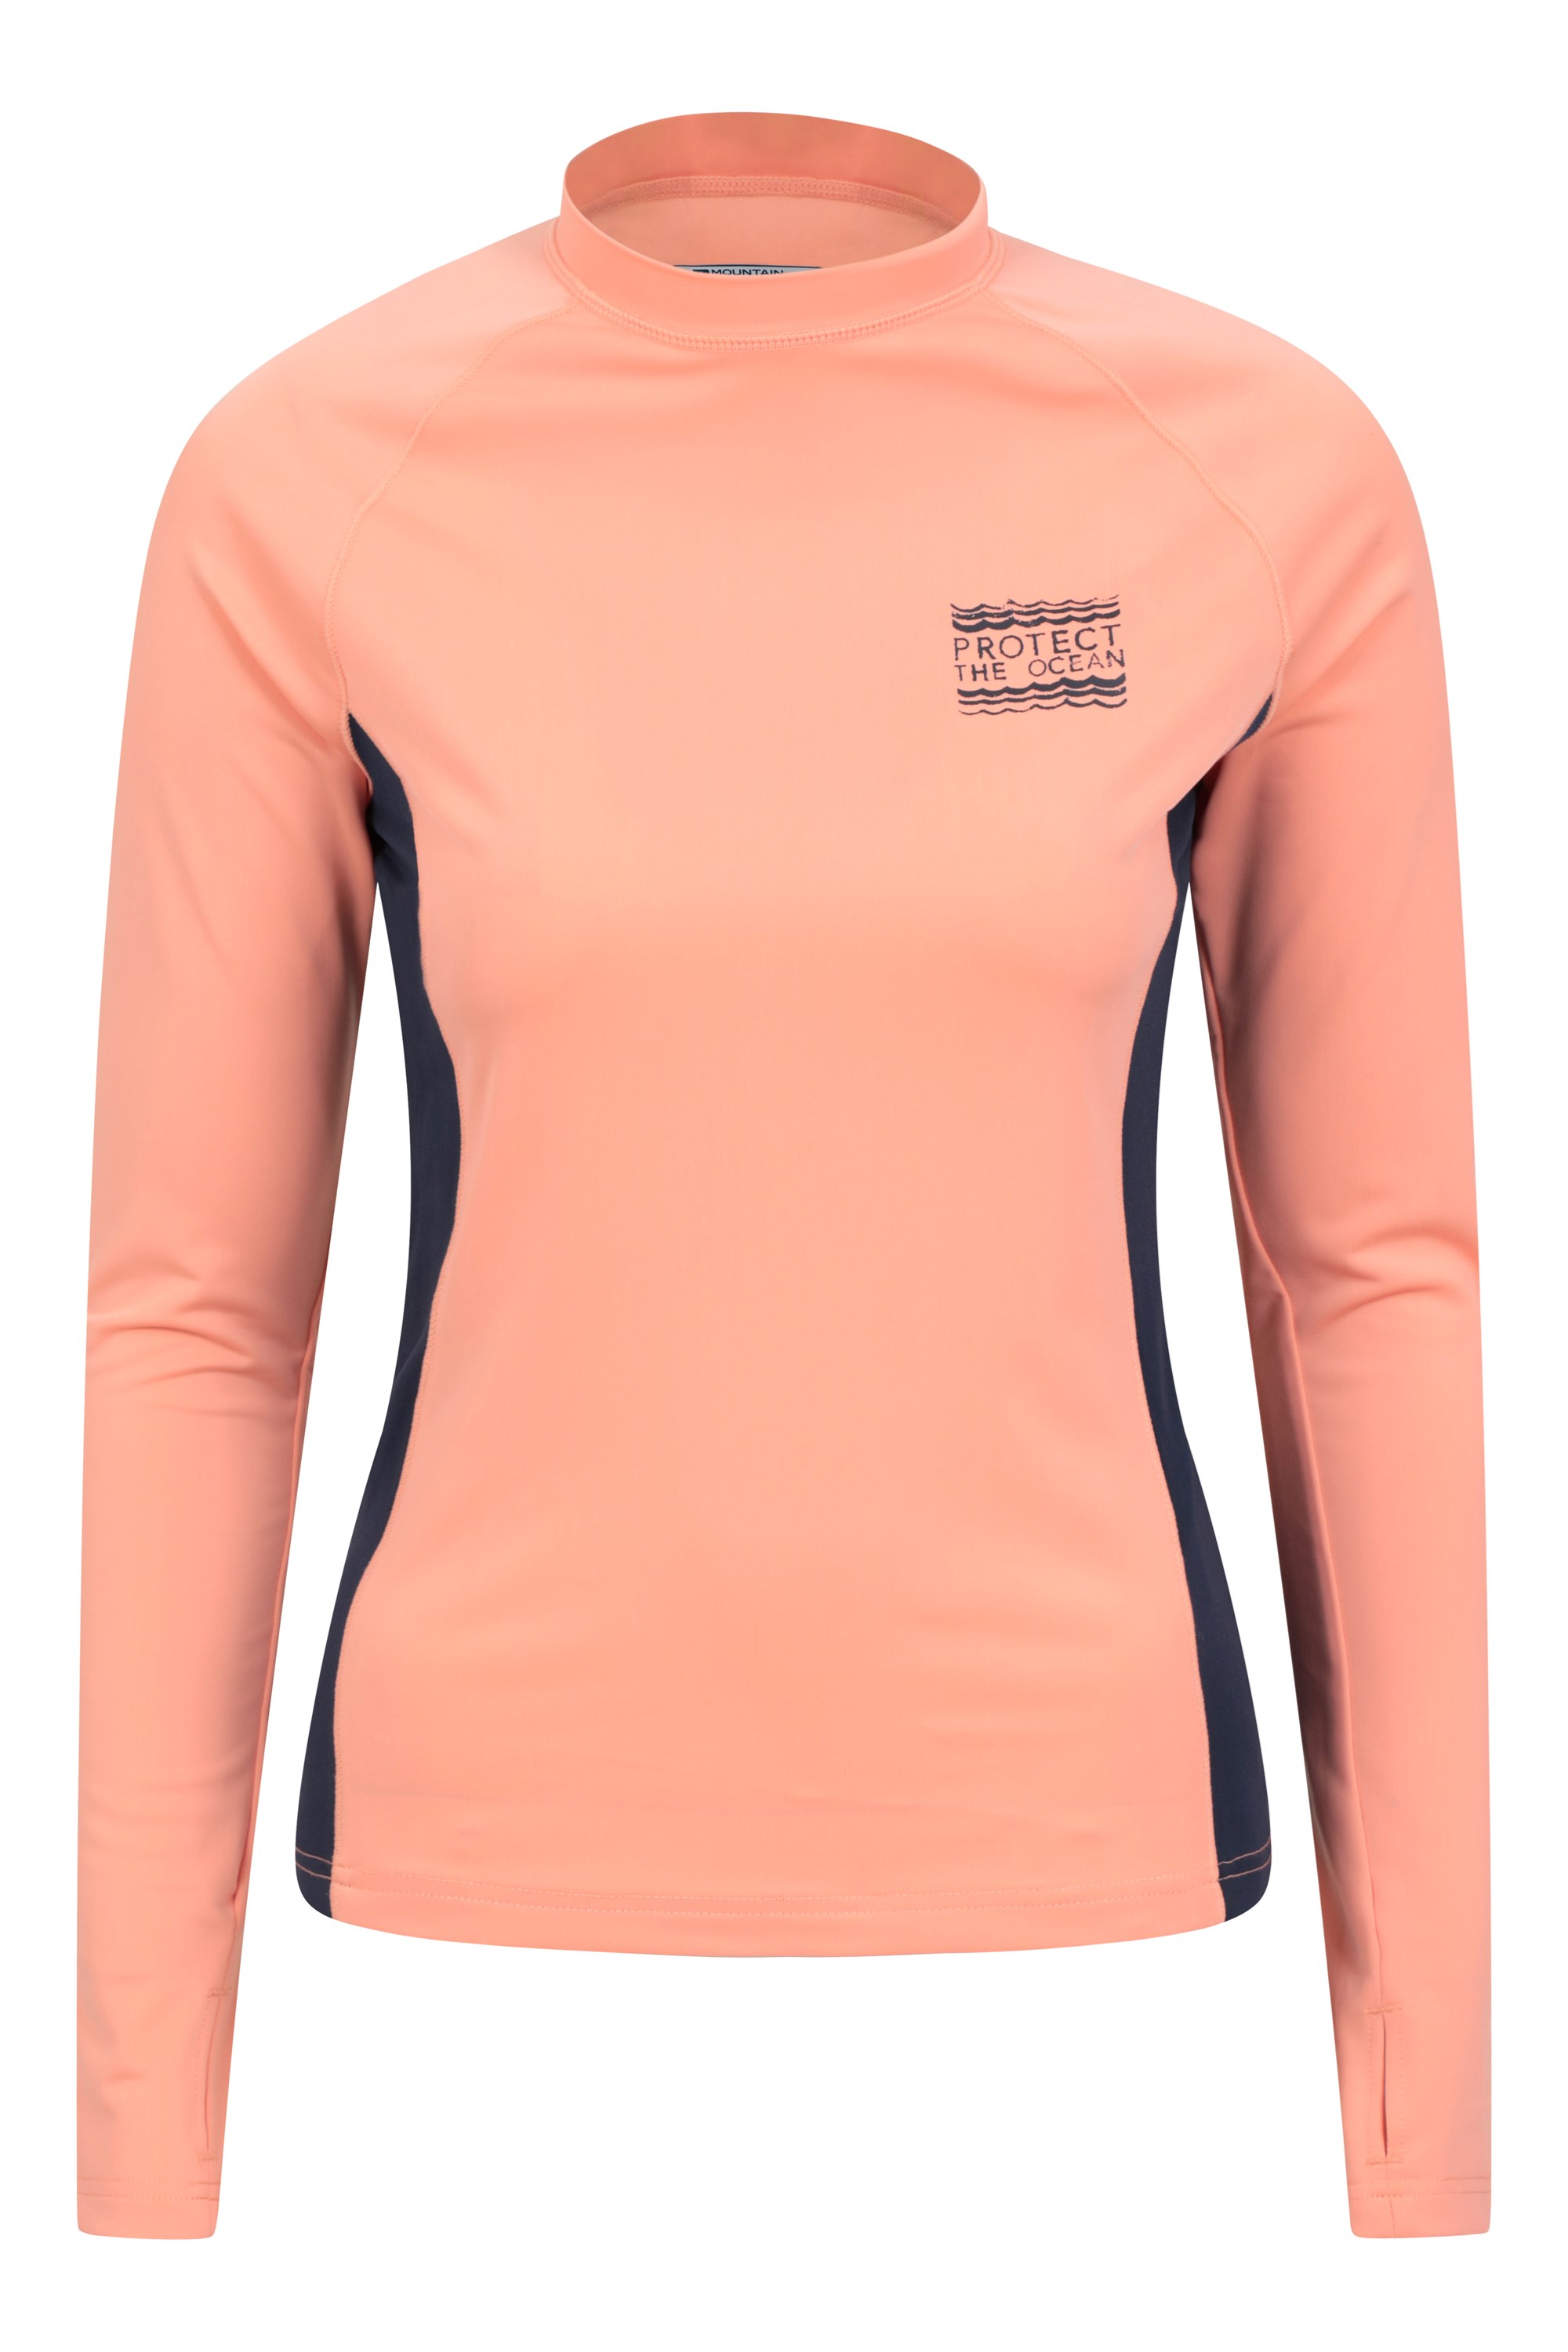 Steve Backshall Ocean Rash Vest koszulka damska do pływania z długim rękawem - Pink